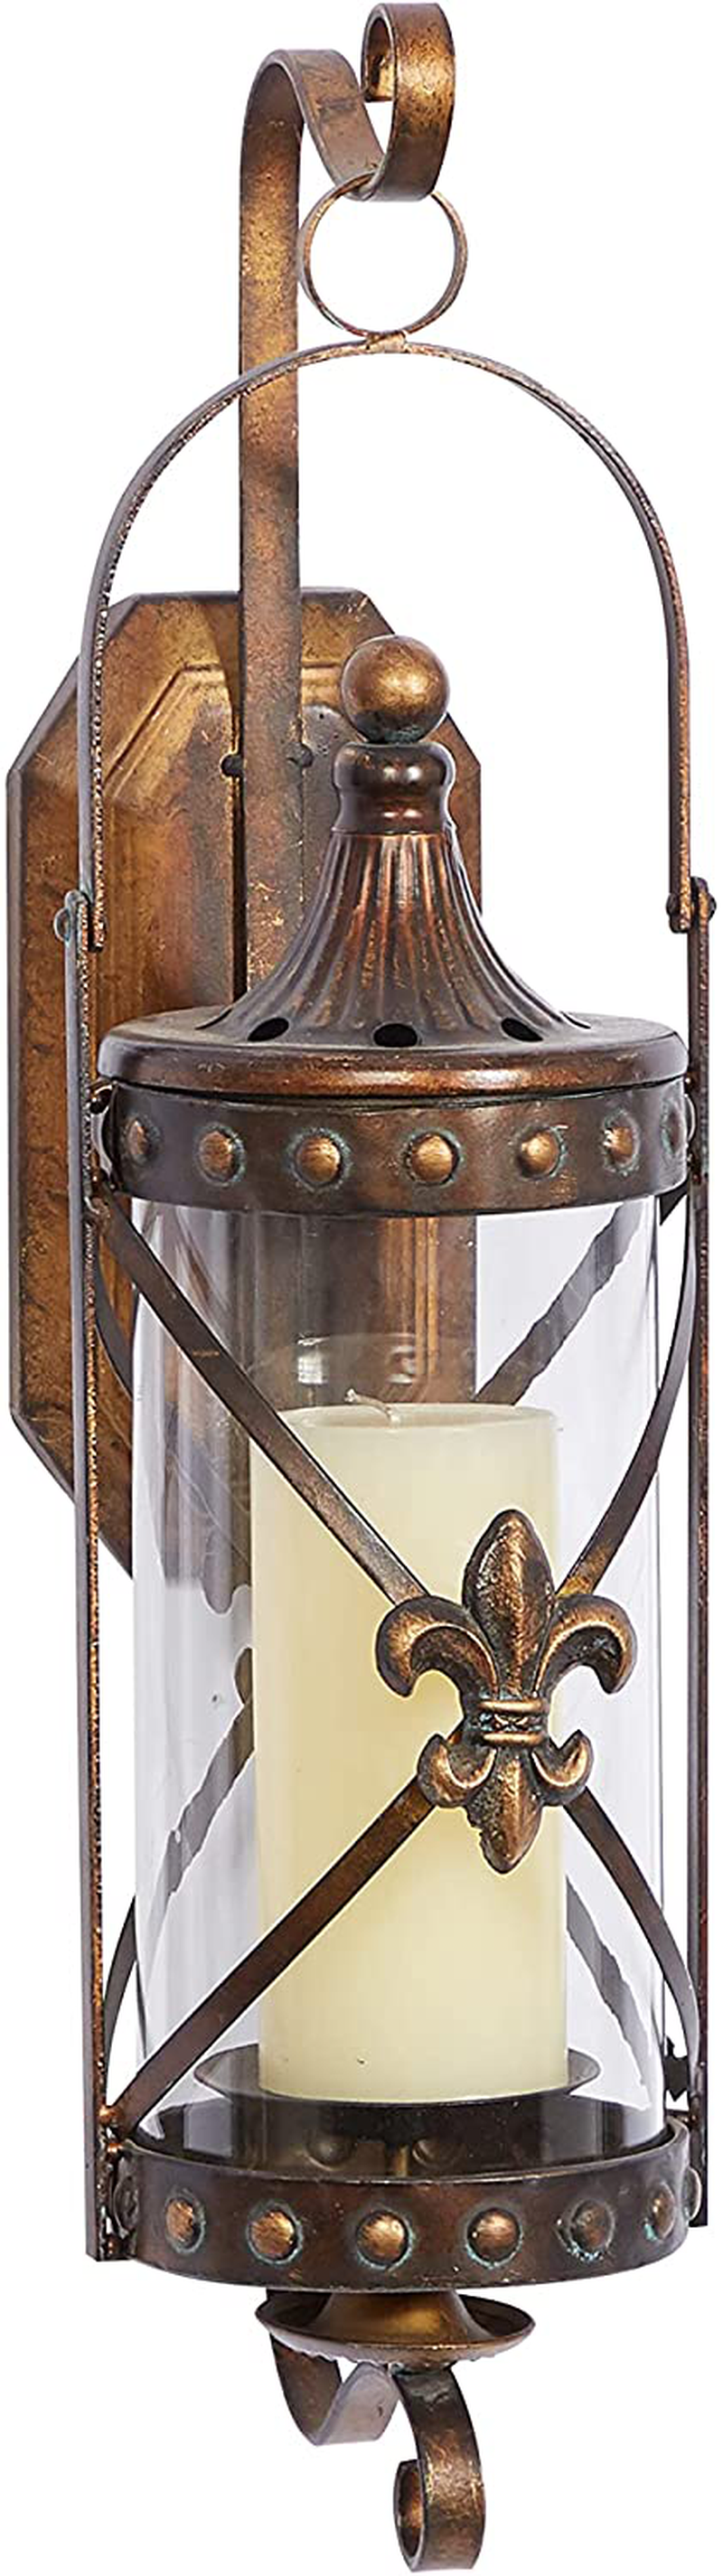 Deco 79 Rustic Fleur-de-Lis-Designed Metal Candle Sconce, 20" H x 7" L, Textured Bronze Finish Home & Garden > Decor > Home Fragrance Accessories > Candle Holders Deco 79   